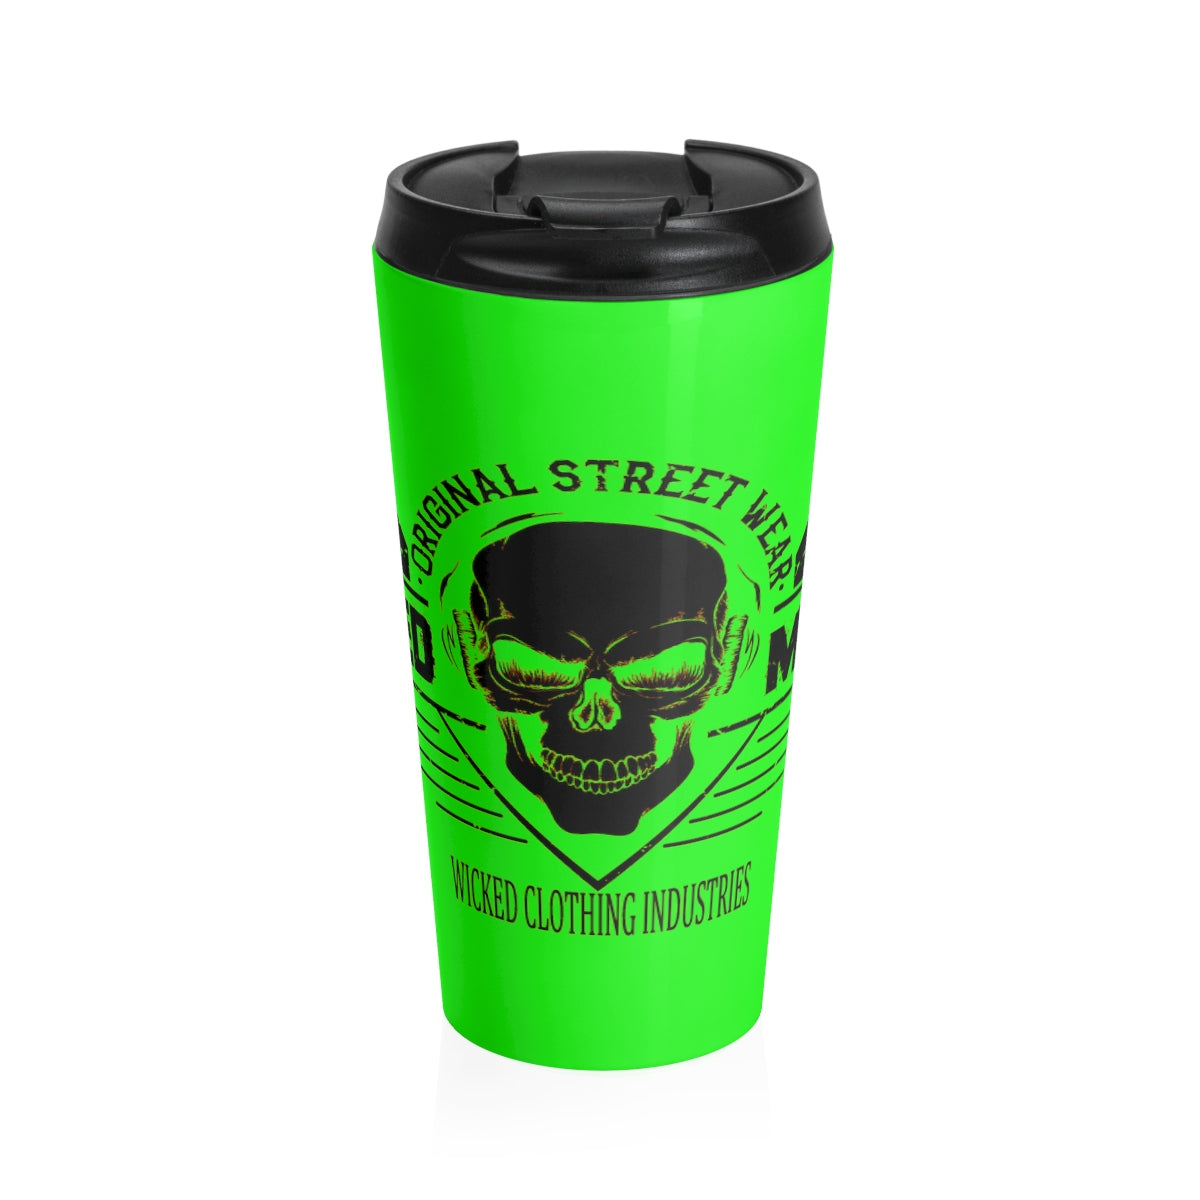 Neon Green/ Wicked Music /Stainless Steel Travel Mug